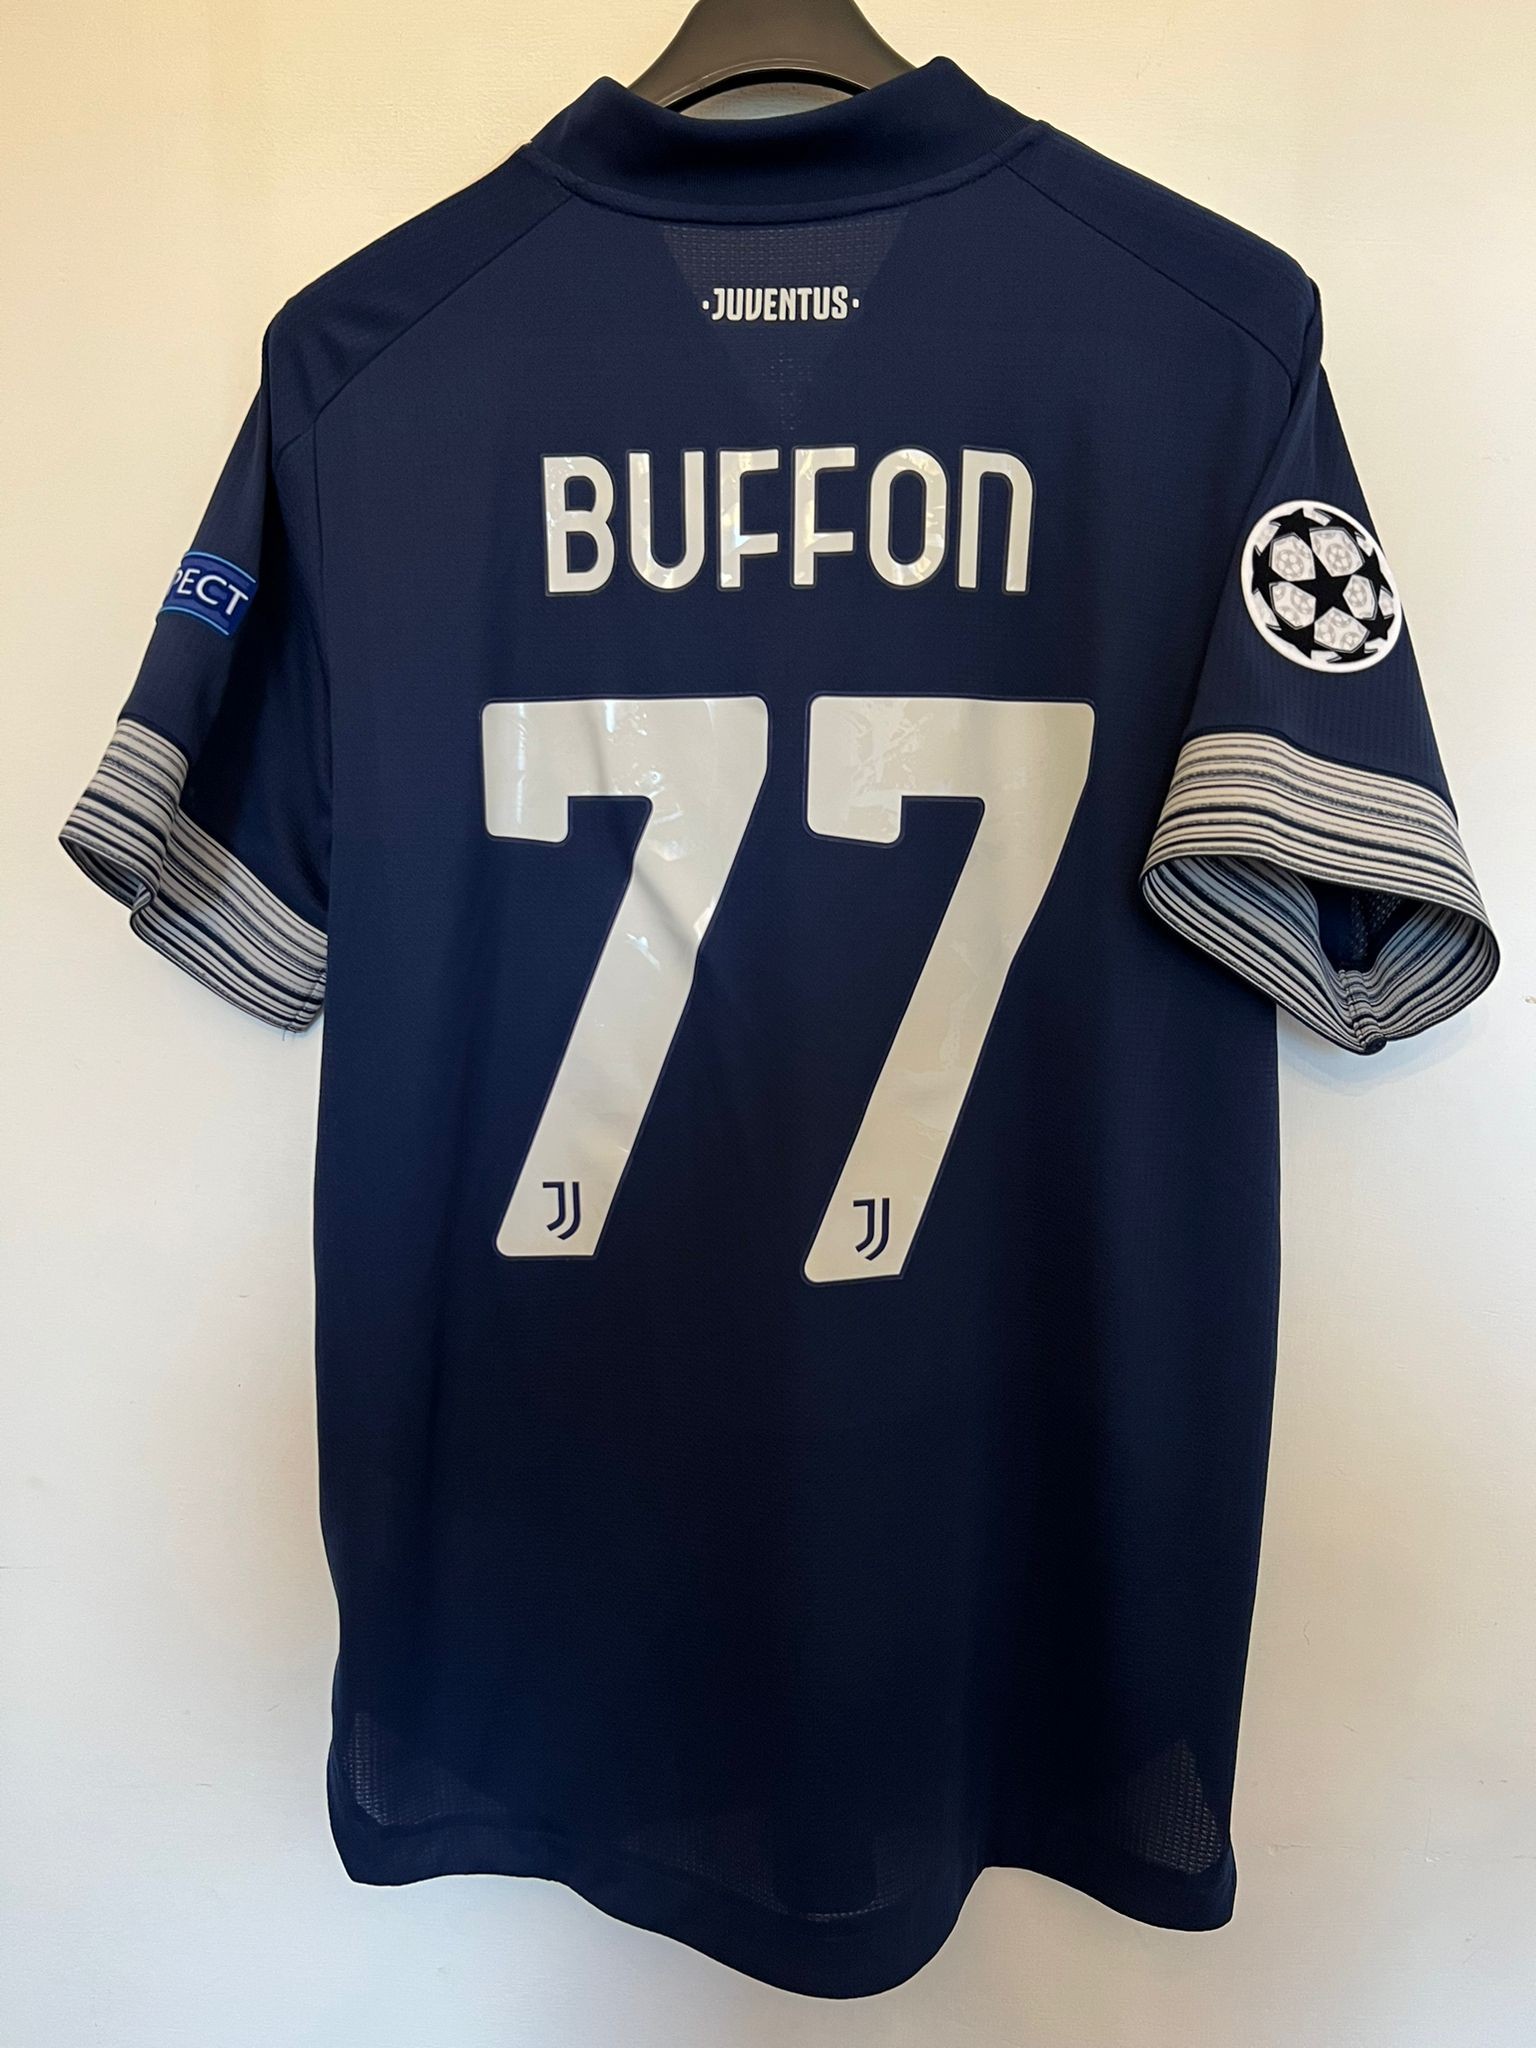 Maglia Buffon Juventus, preparata UCL 2020/21 - CharityStars